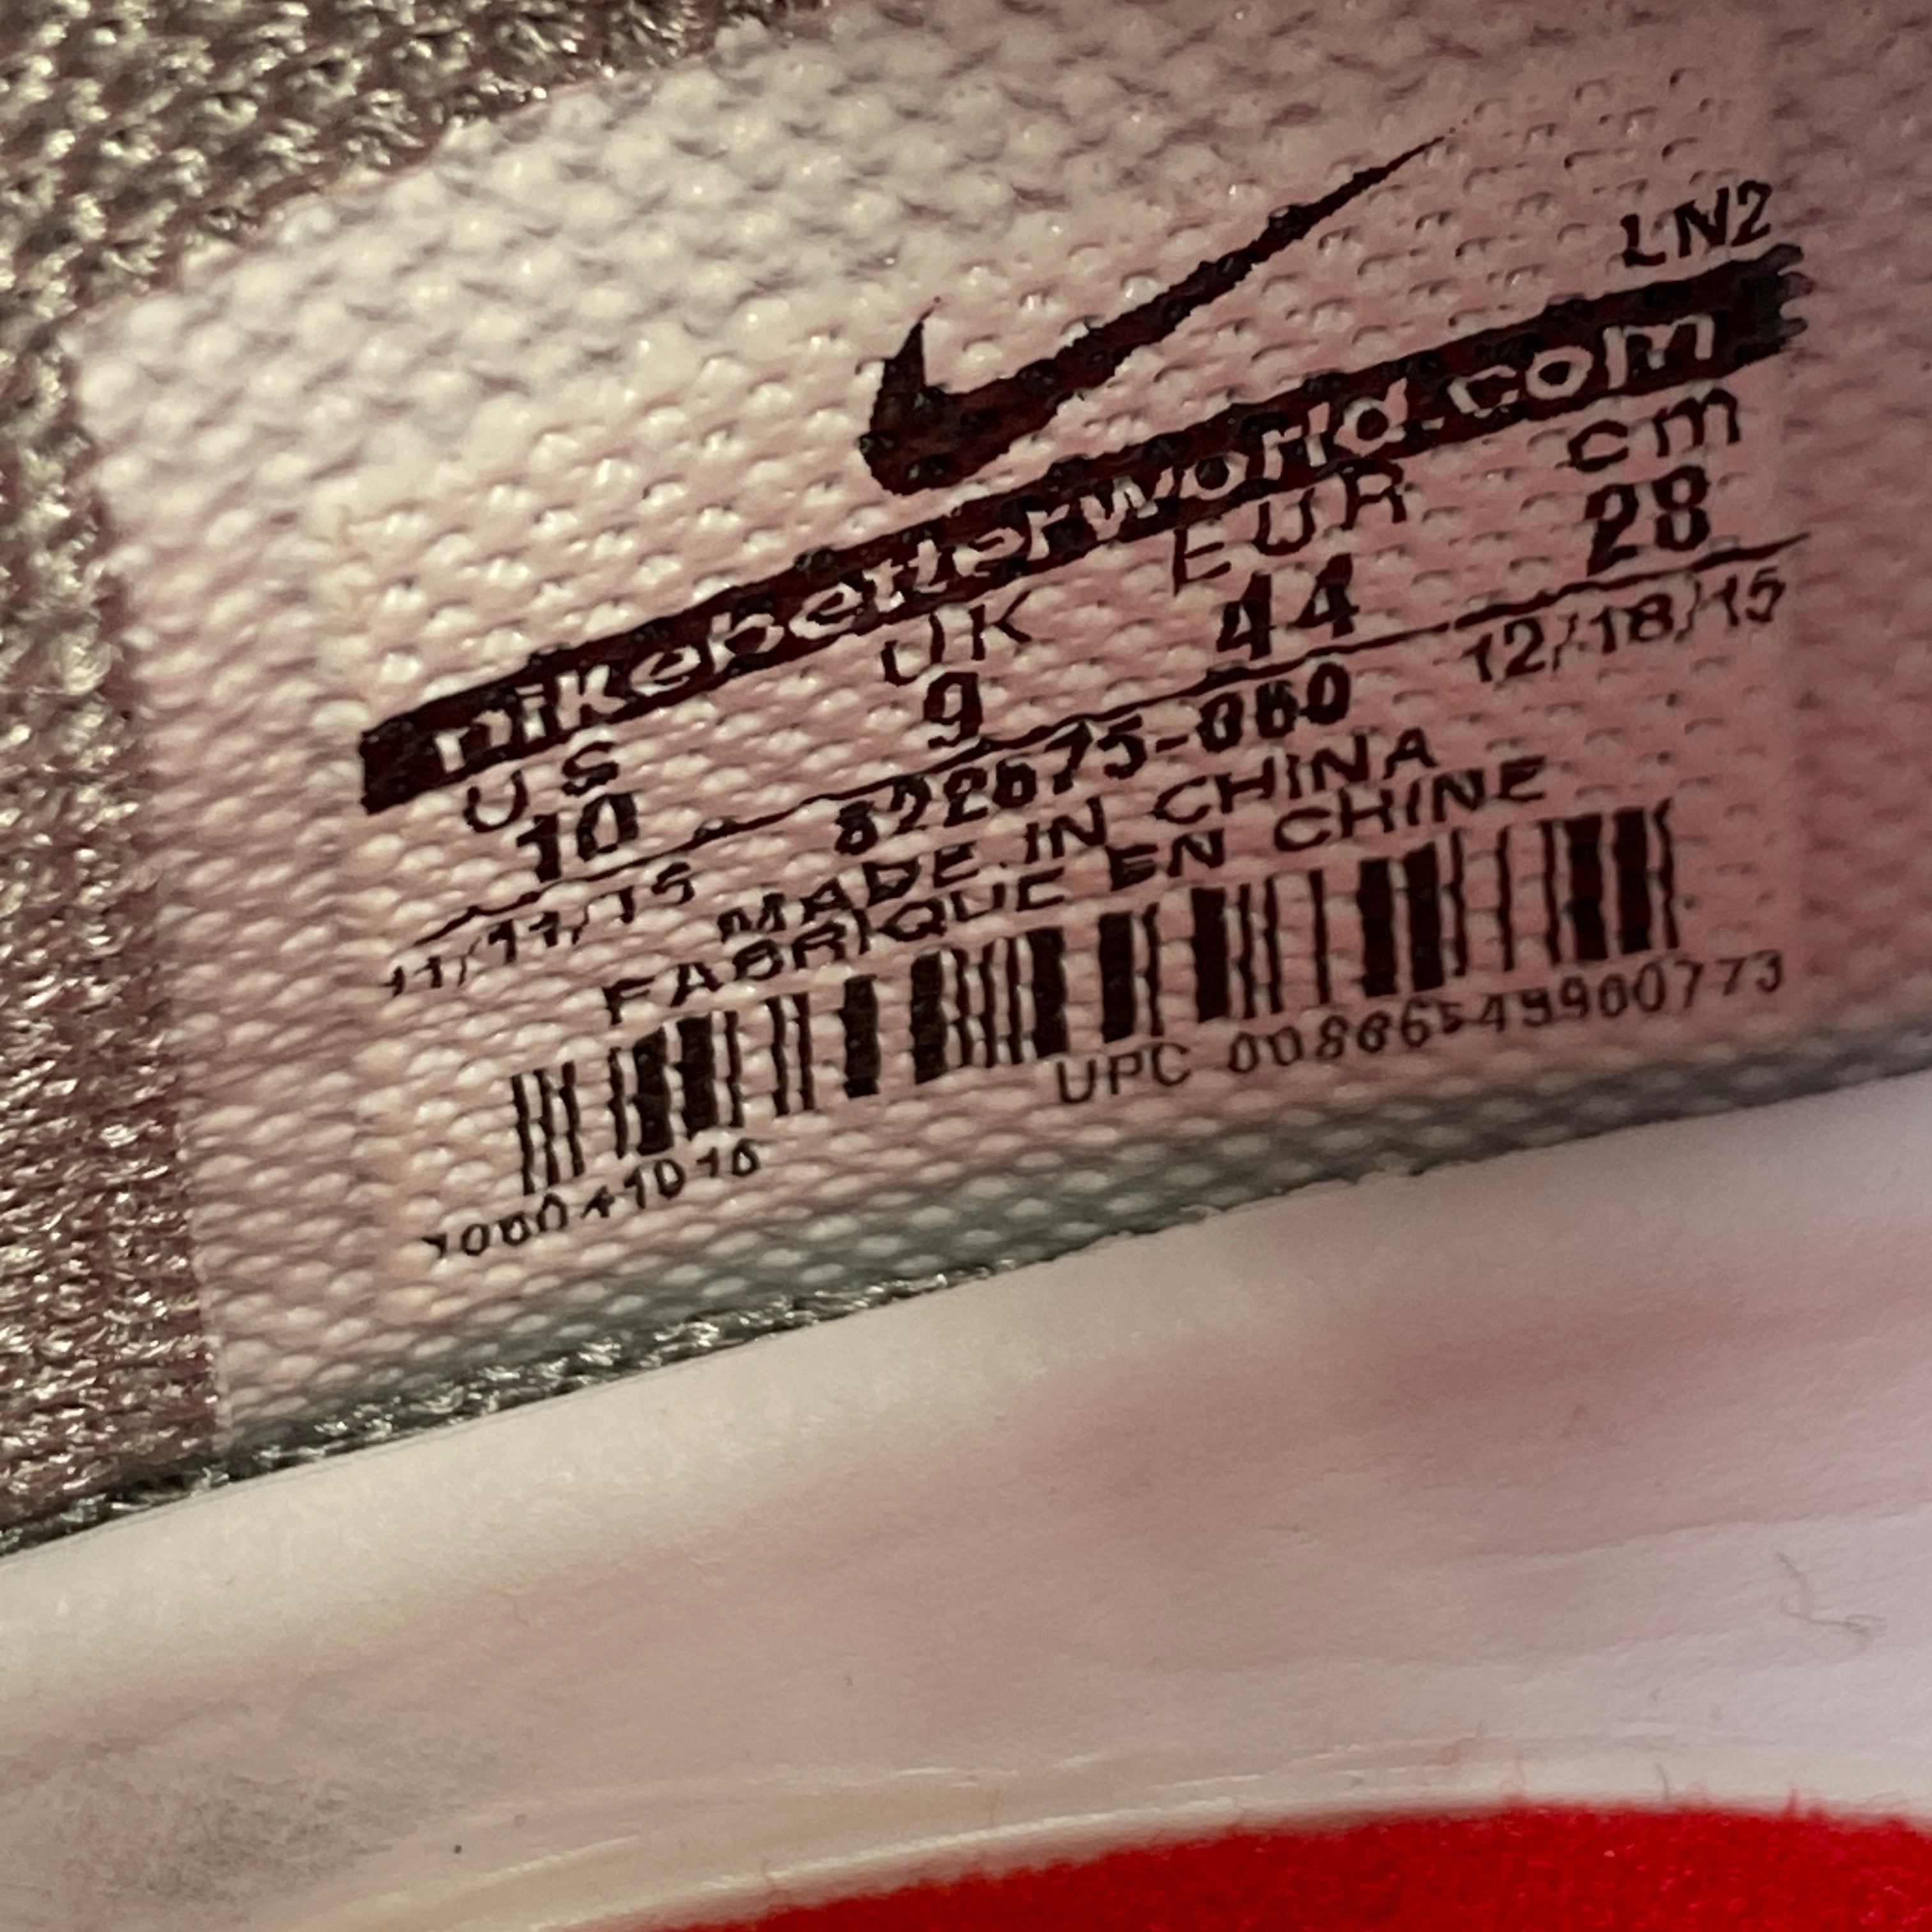 Nike Kobe 11 &quot;Tinker&quot; 2016 New Size 10